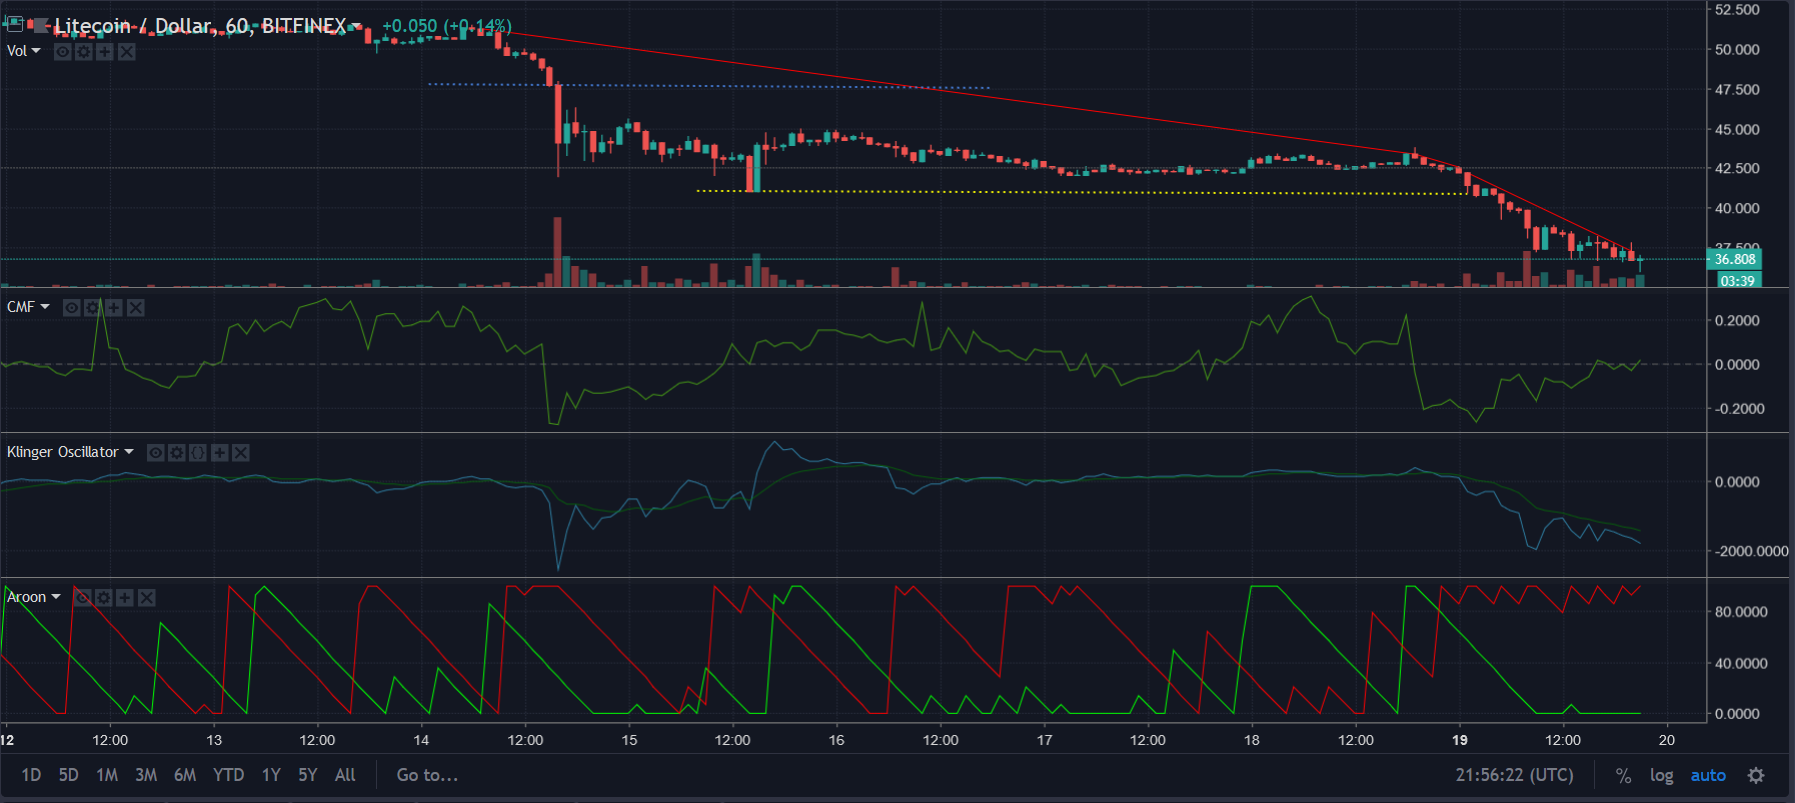 LTC Chart 1 hour | Source: TradingView